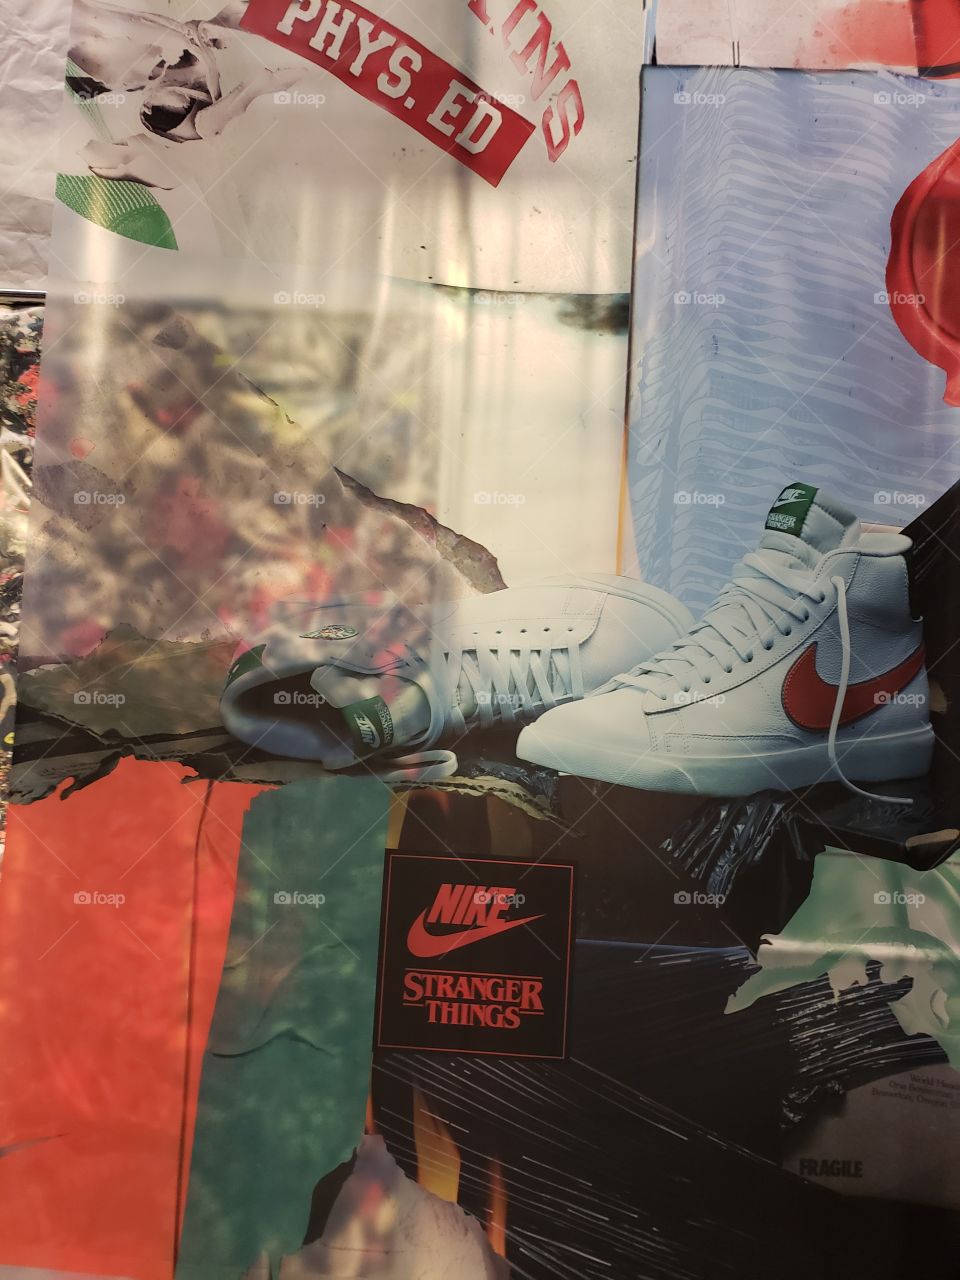 Nike store display